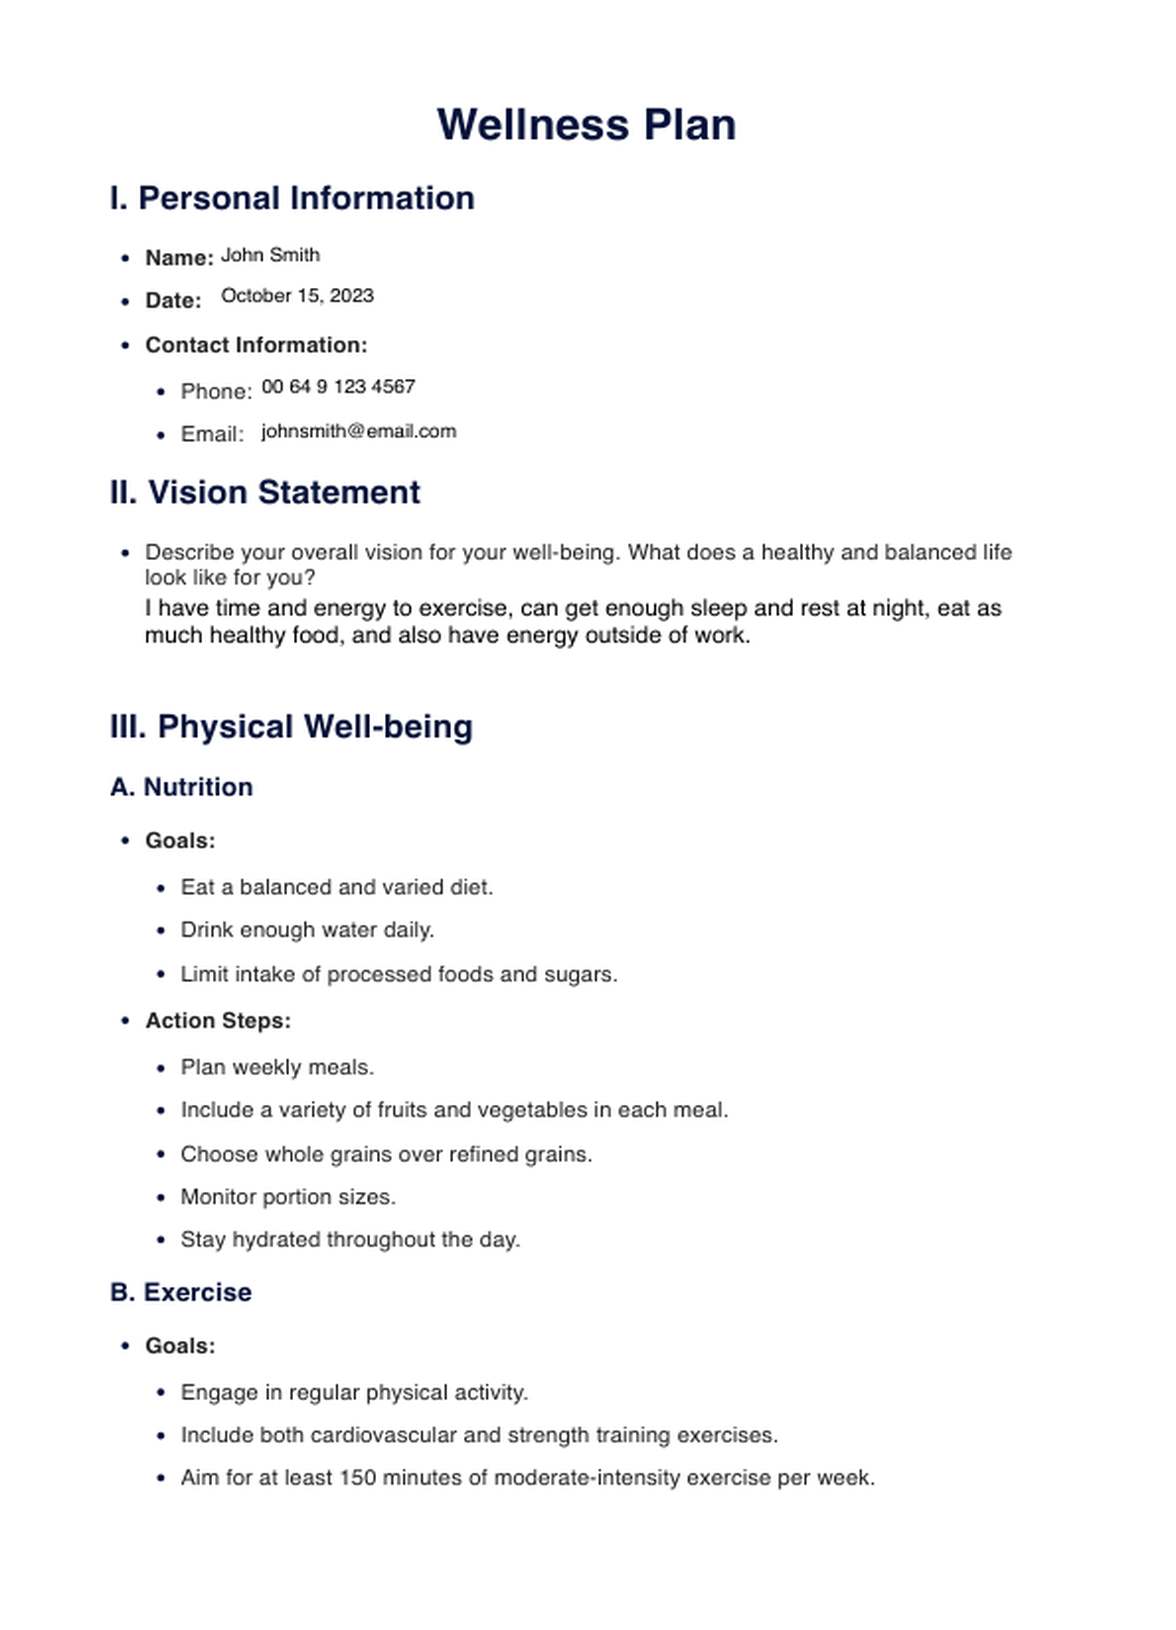 Wellness Plan PDF Example